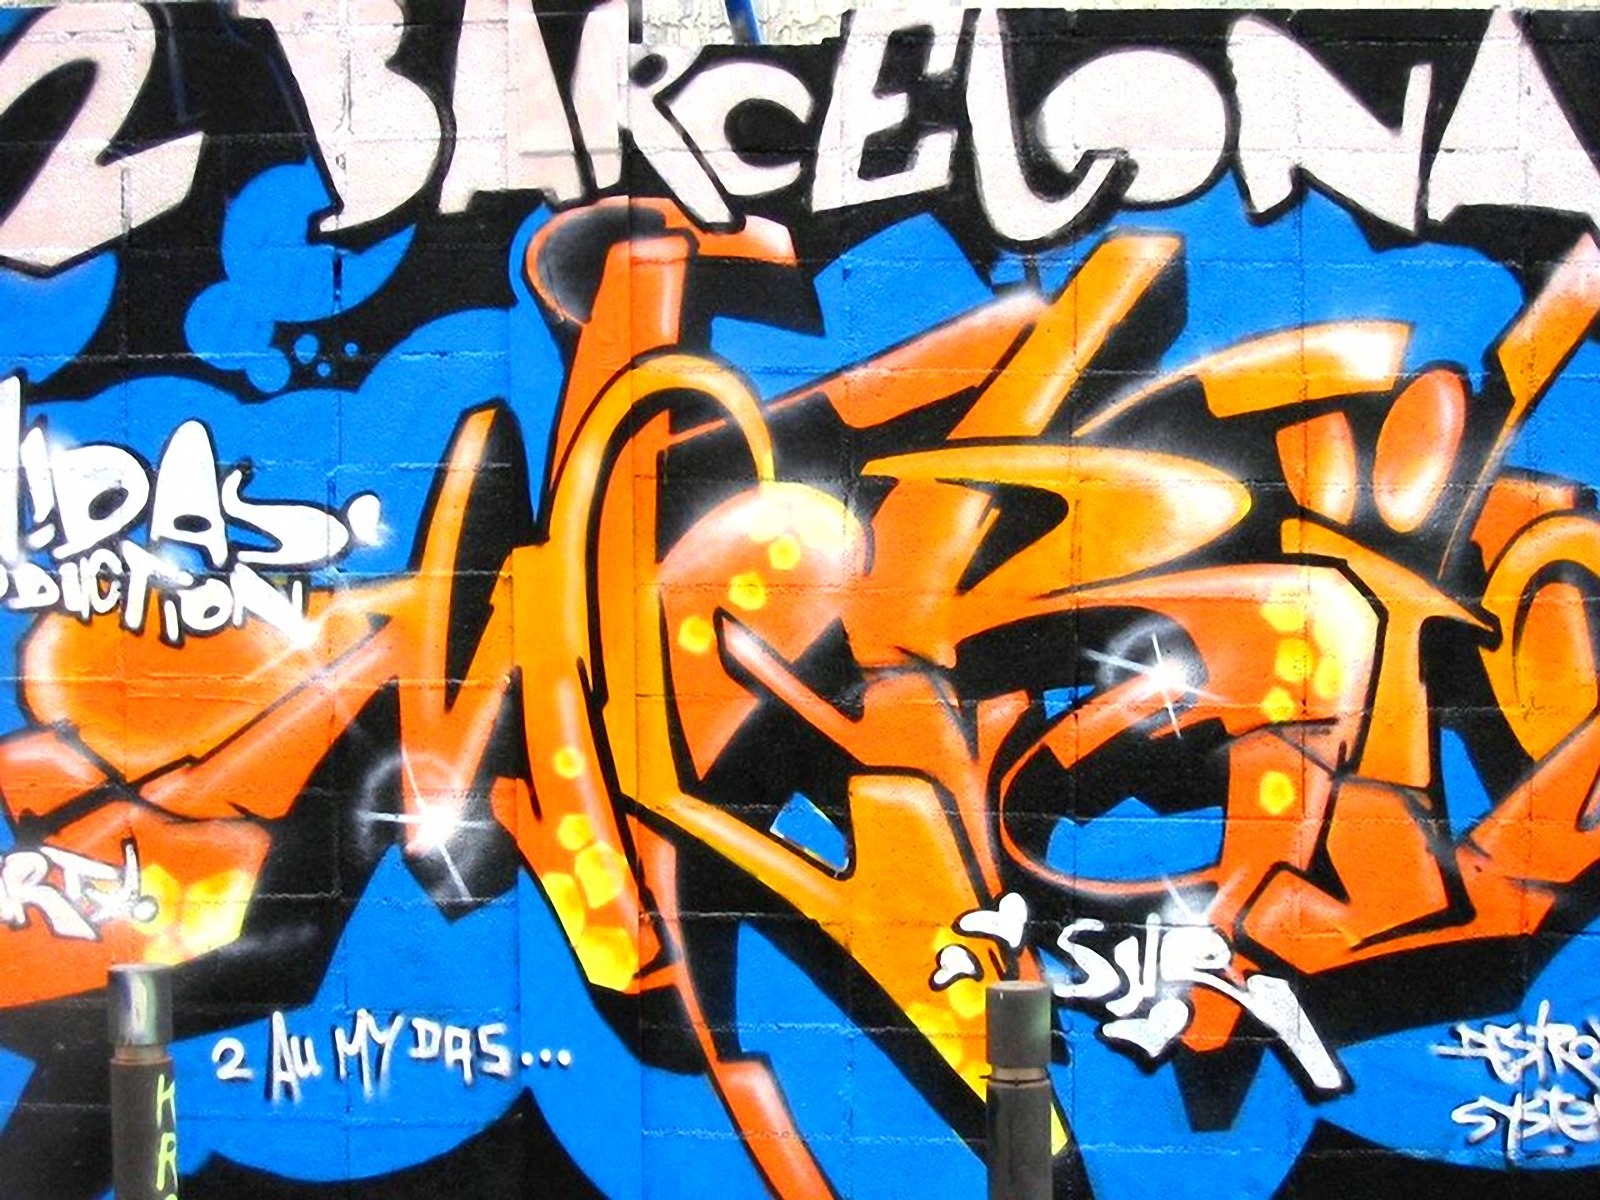 graffiti wallpaper Wallpapers - Free graffiti wallpaper Wallpapers ...